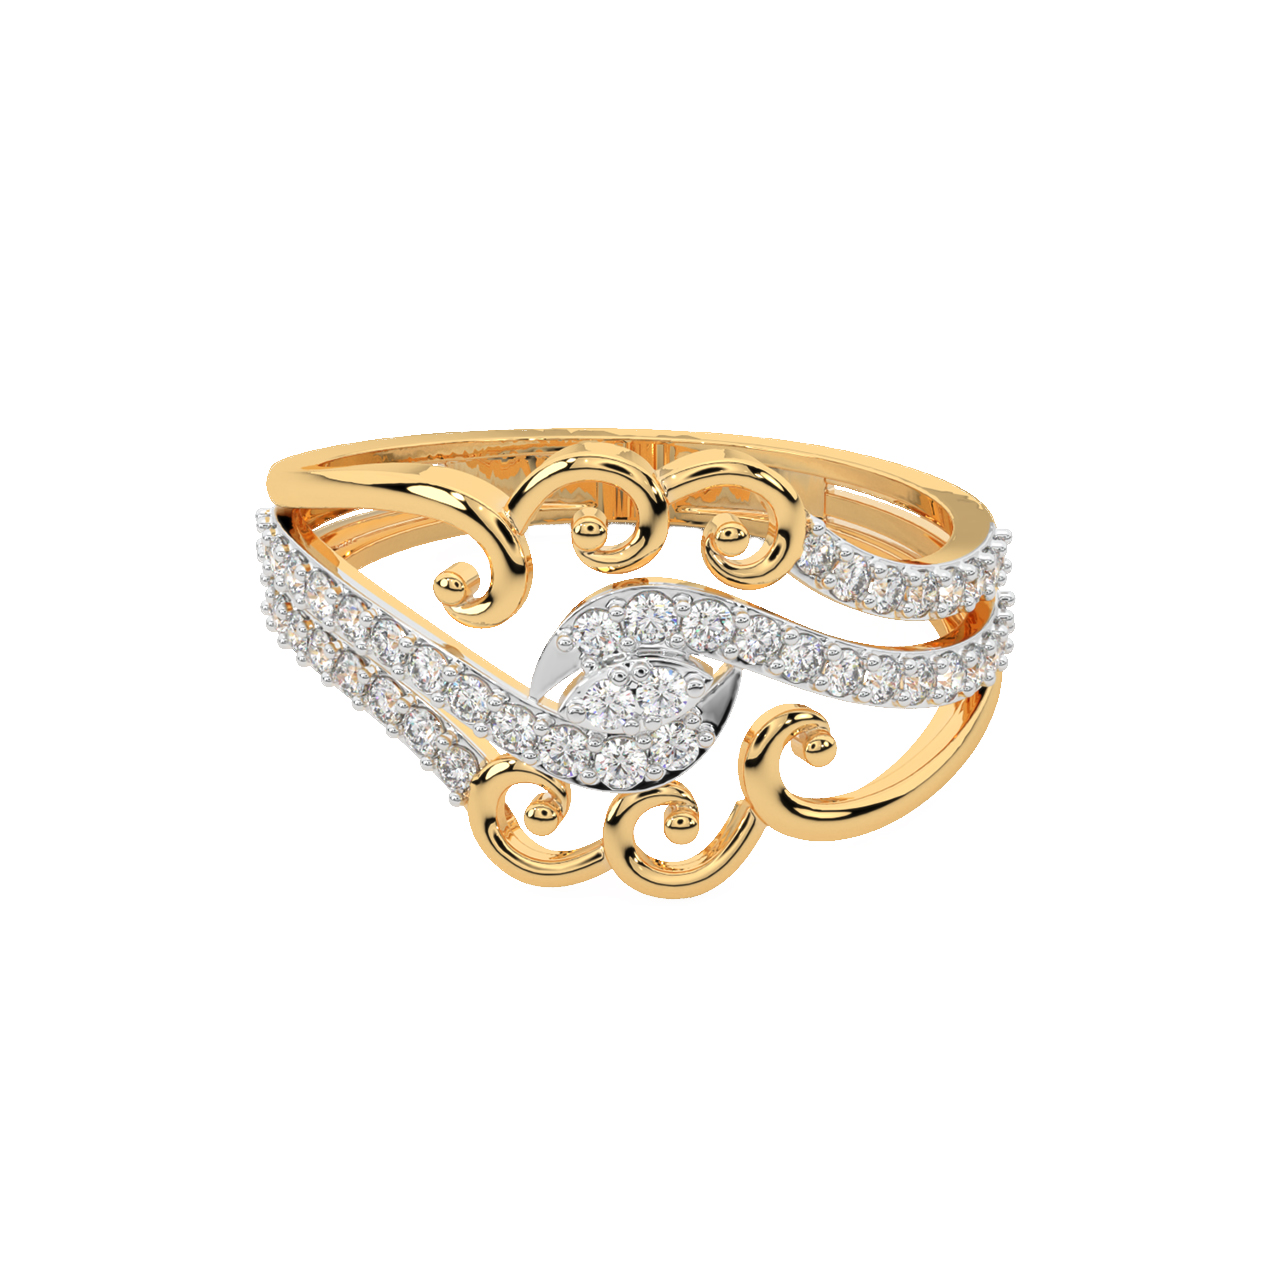 Thomas Diamond Engagement Ring